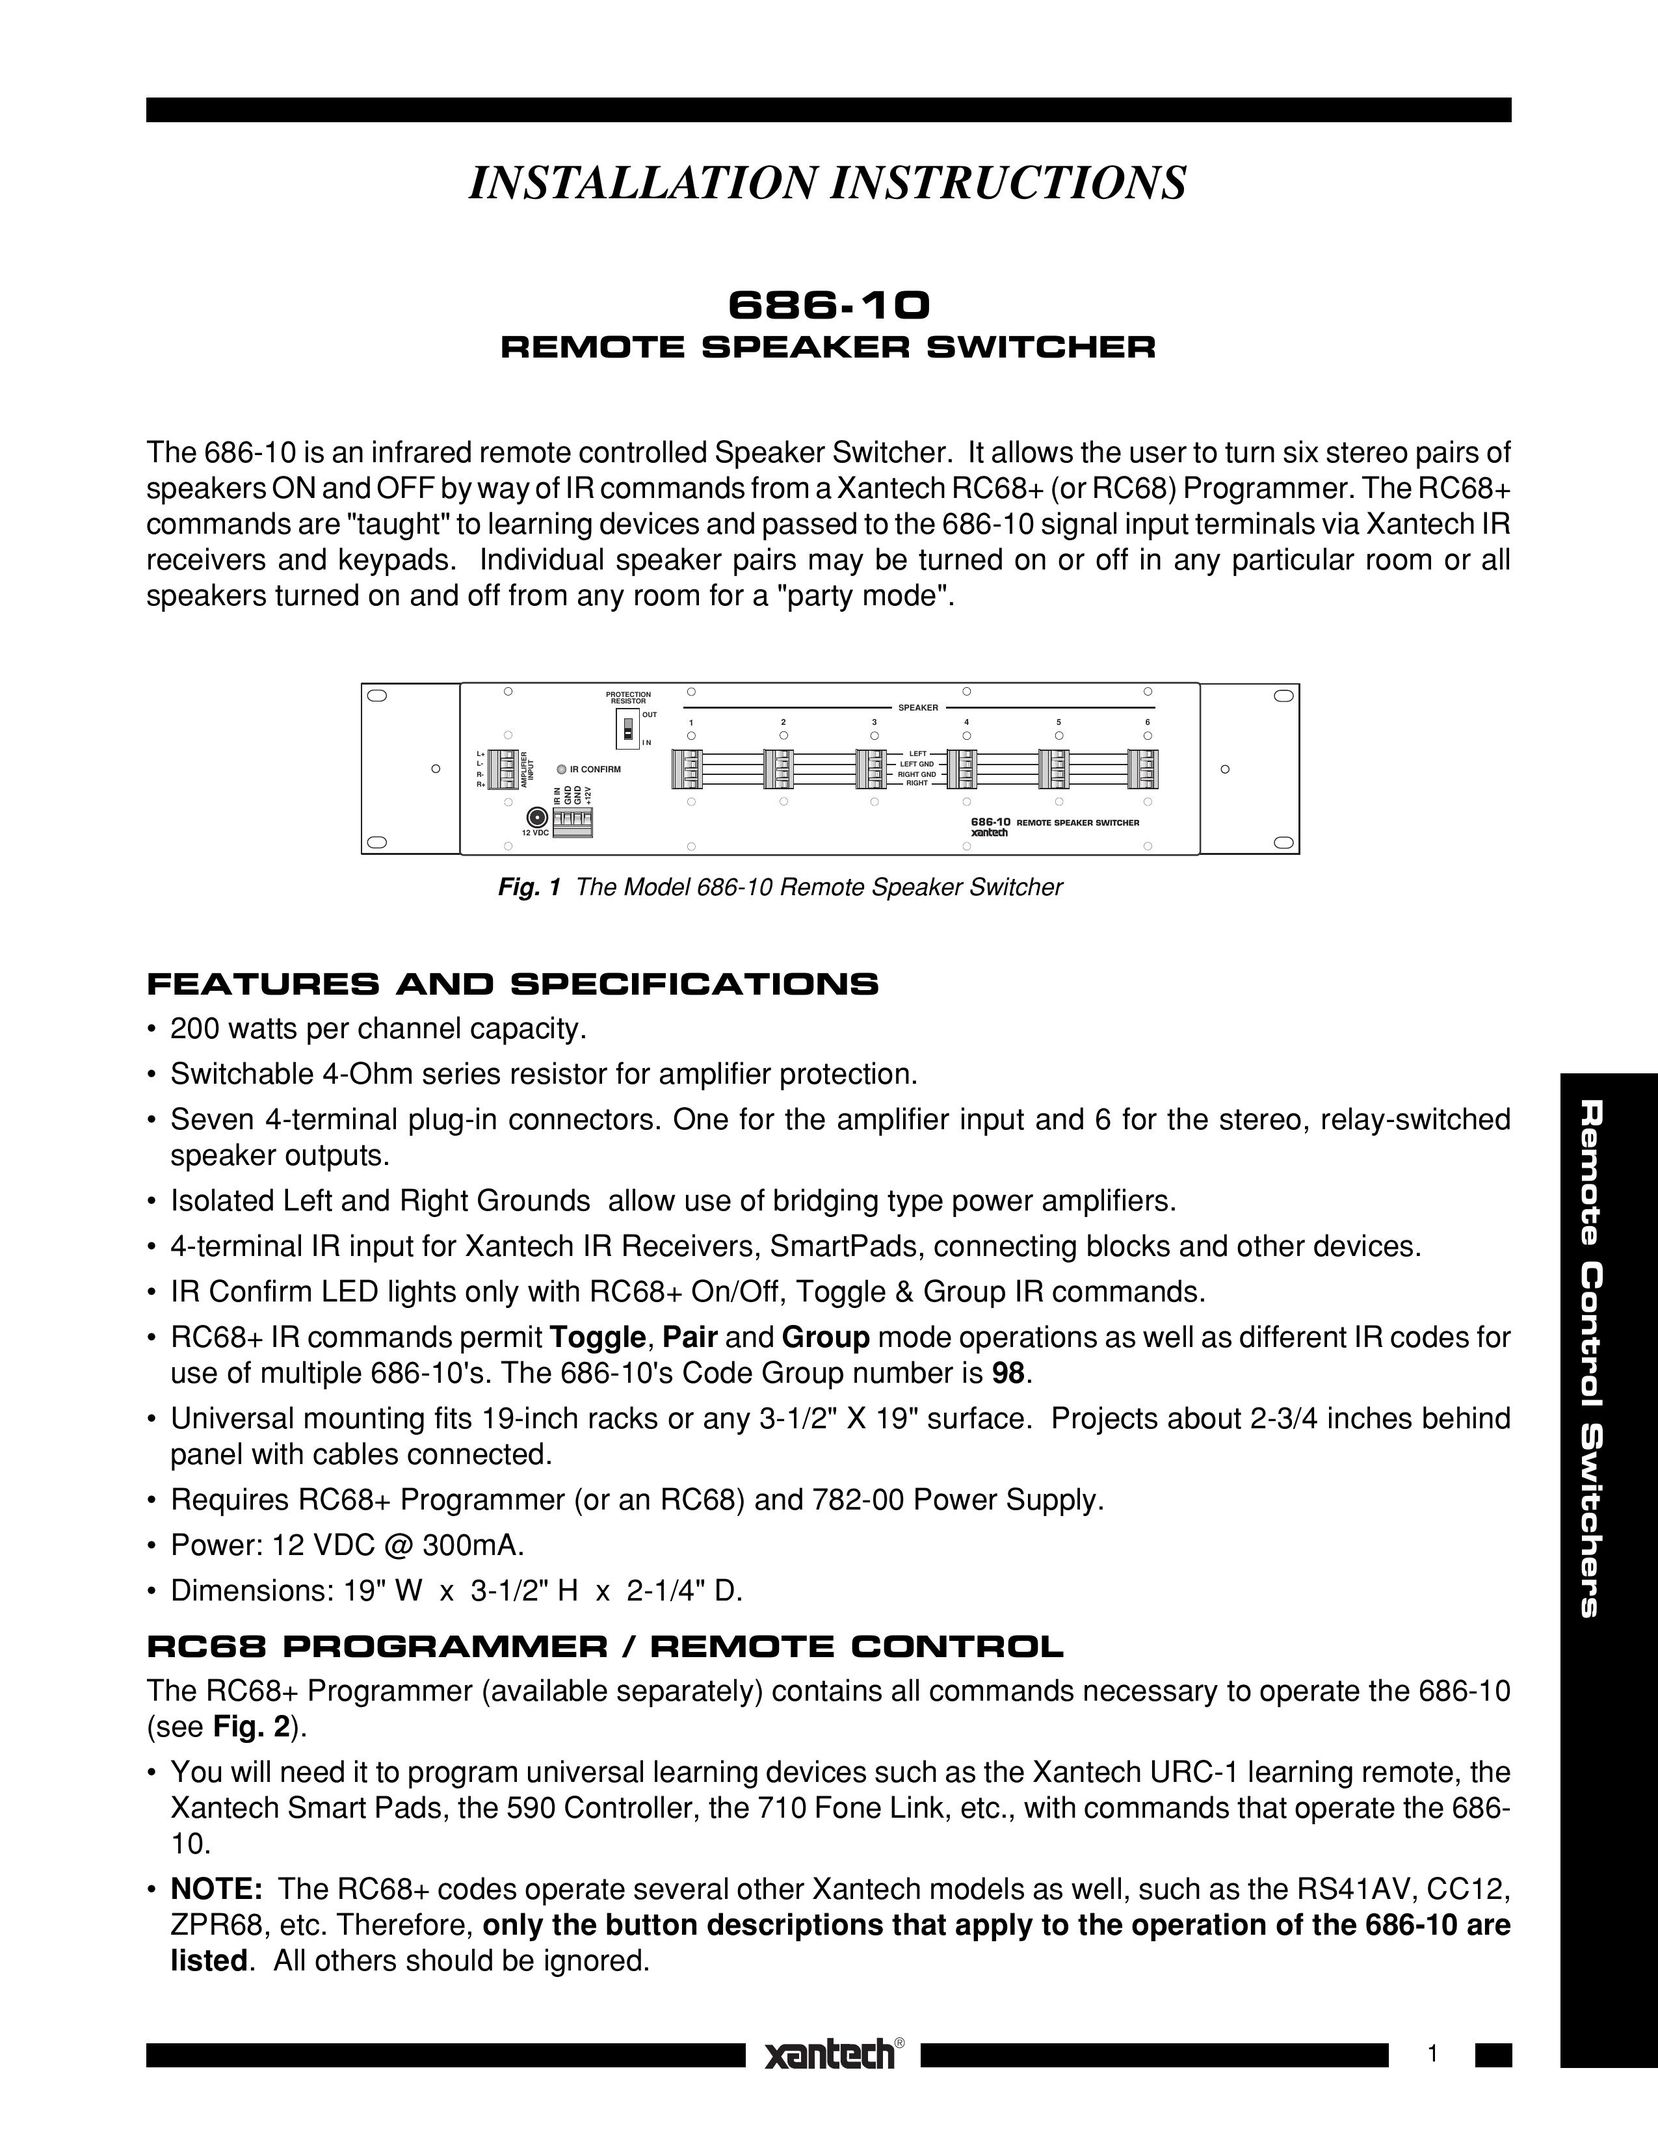 Xantech 686-10 Universal Remote User Manual